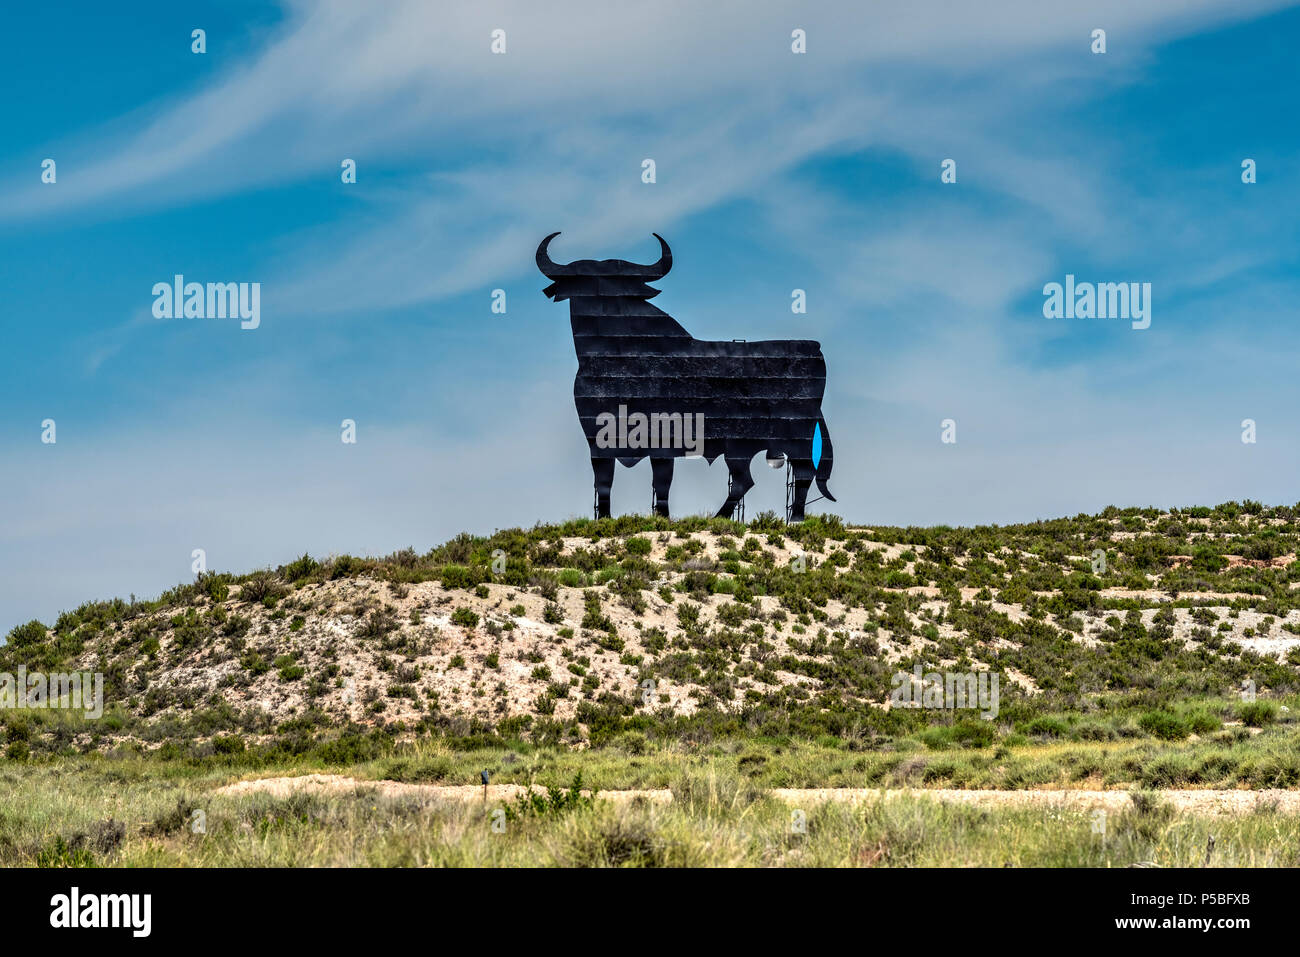 Die berühmten Osborne Stier oder Toro de Osborne Werbung Plakat irgendwo in Aragon, Spanien Stockfoto